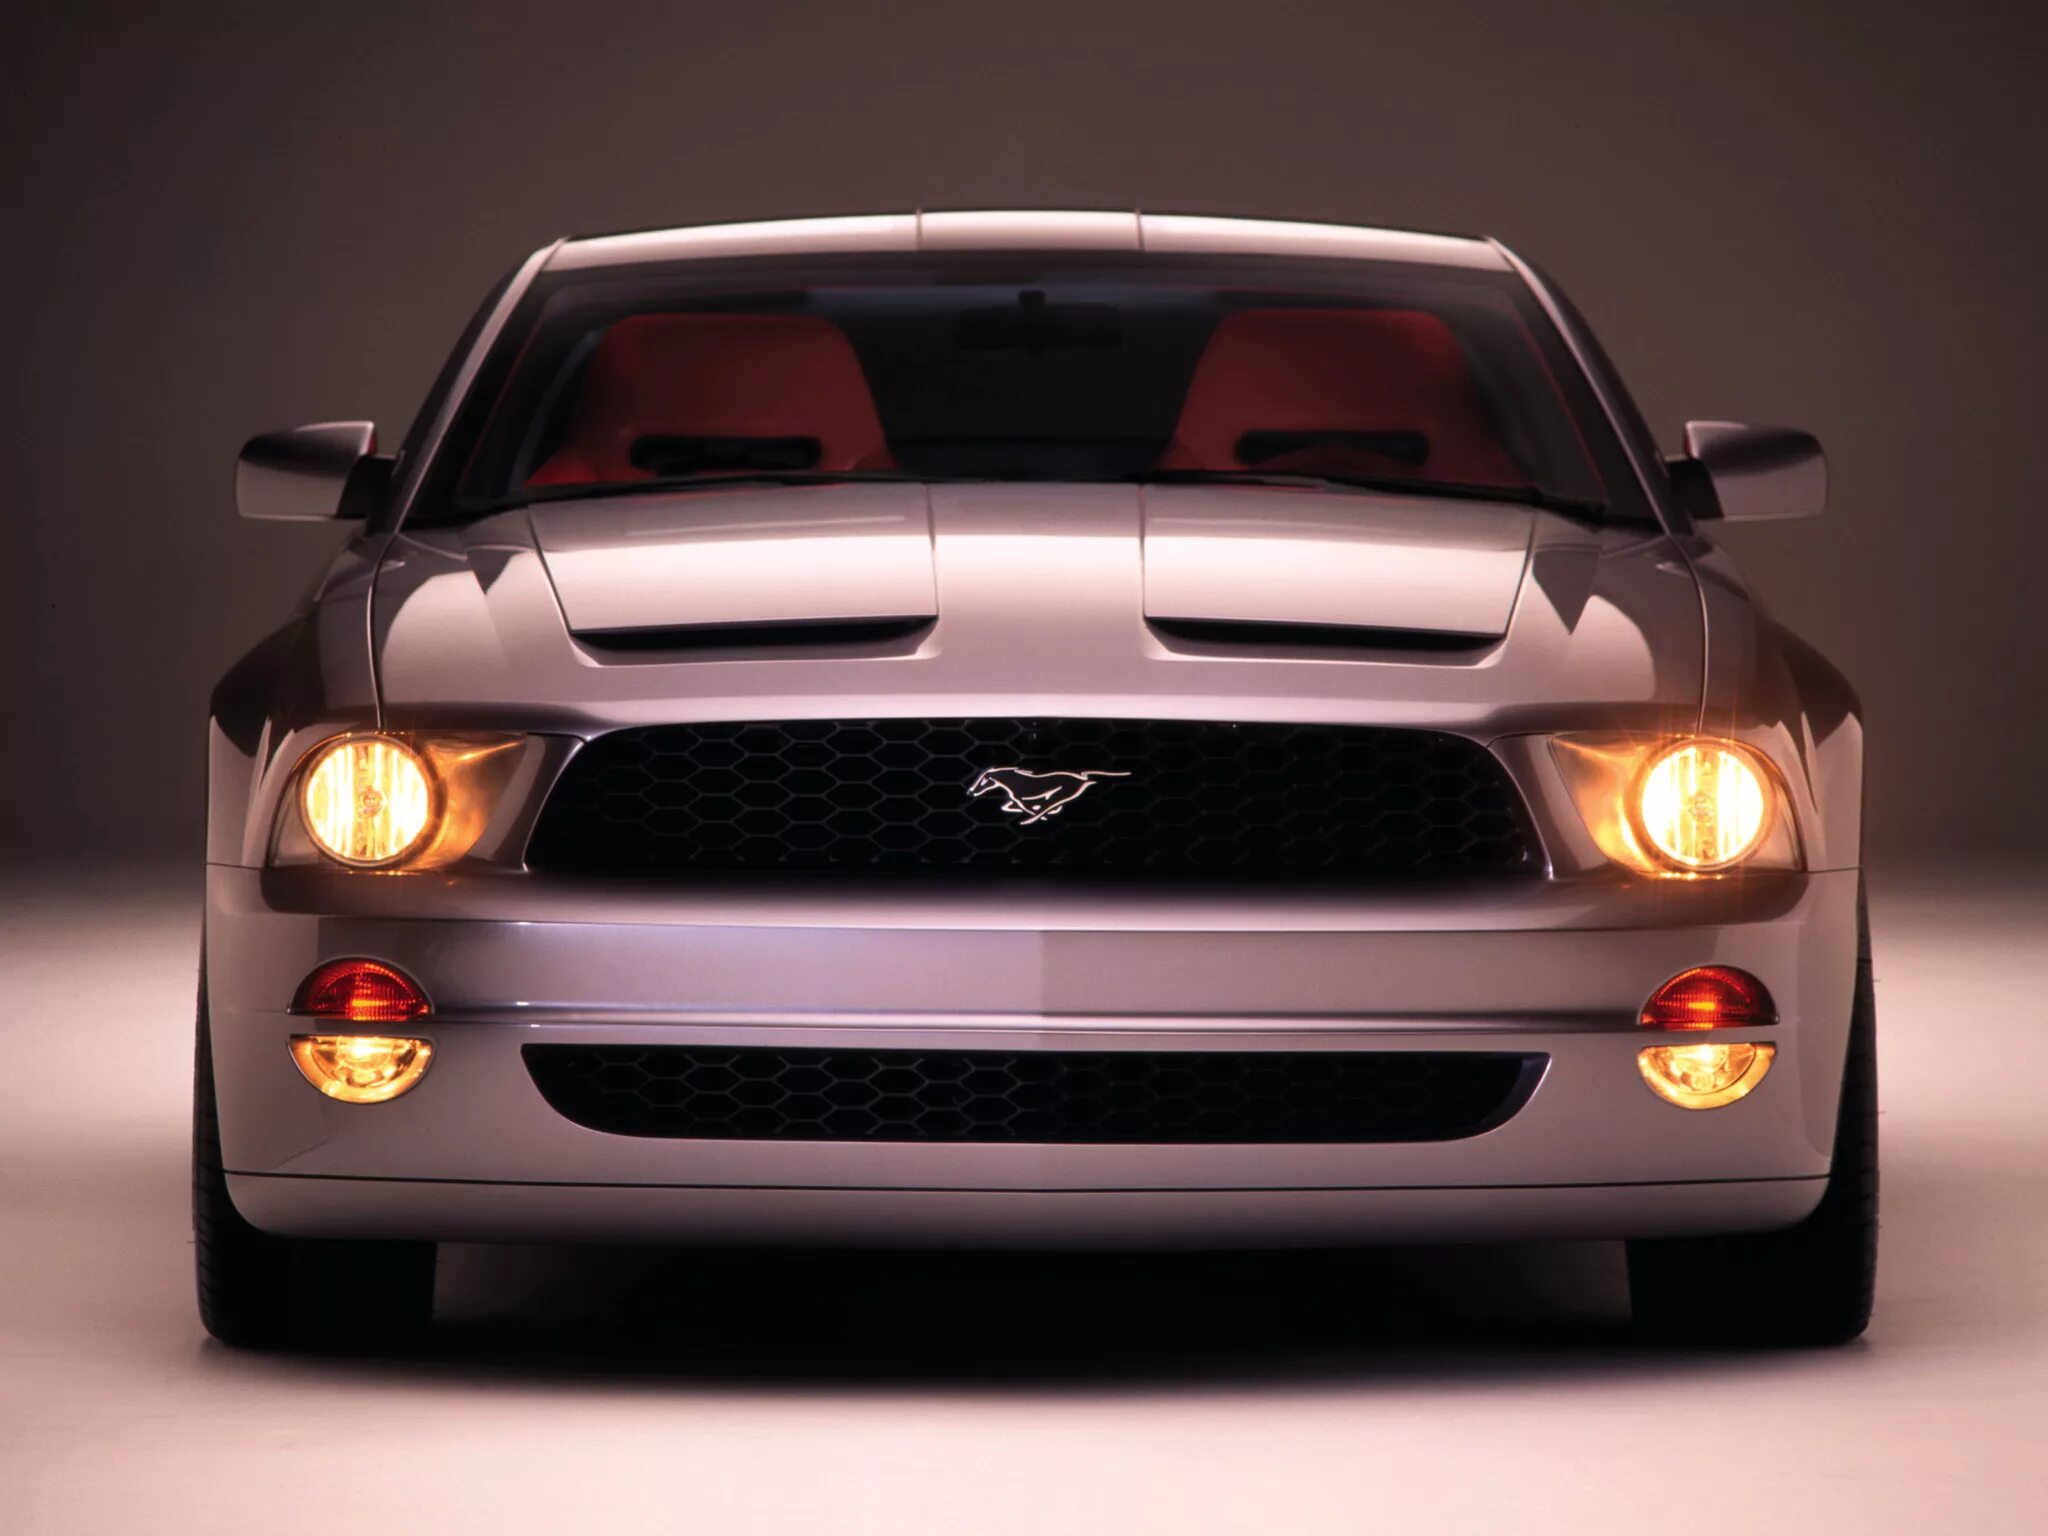 Форд Мустанг 2003 gt. Ford Mustang 2003. Ford Mustang Concept 2003. Ford Mustang gt Concept 2003. Вперед машины включай